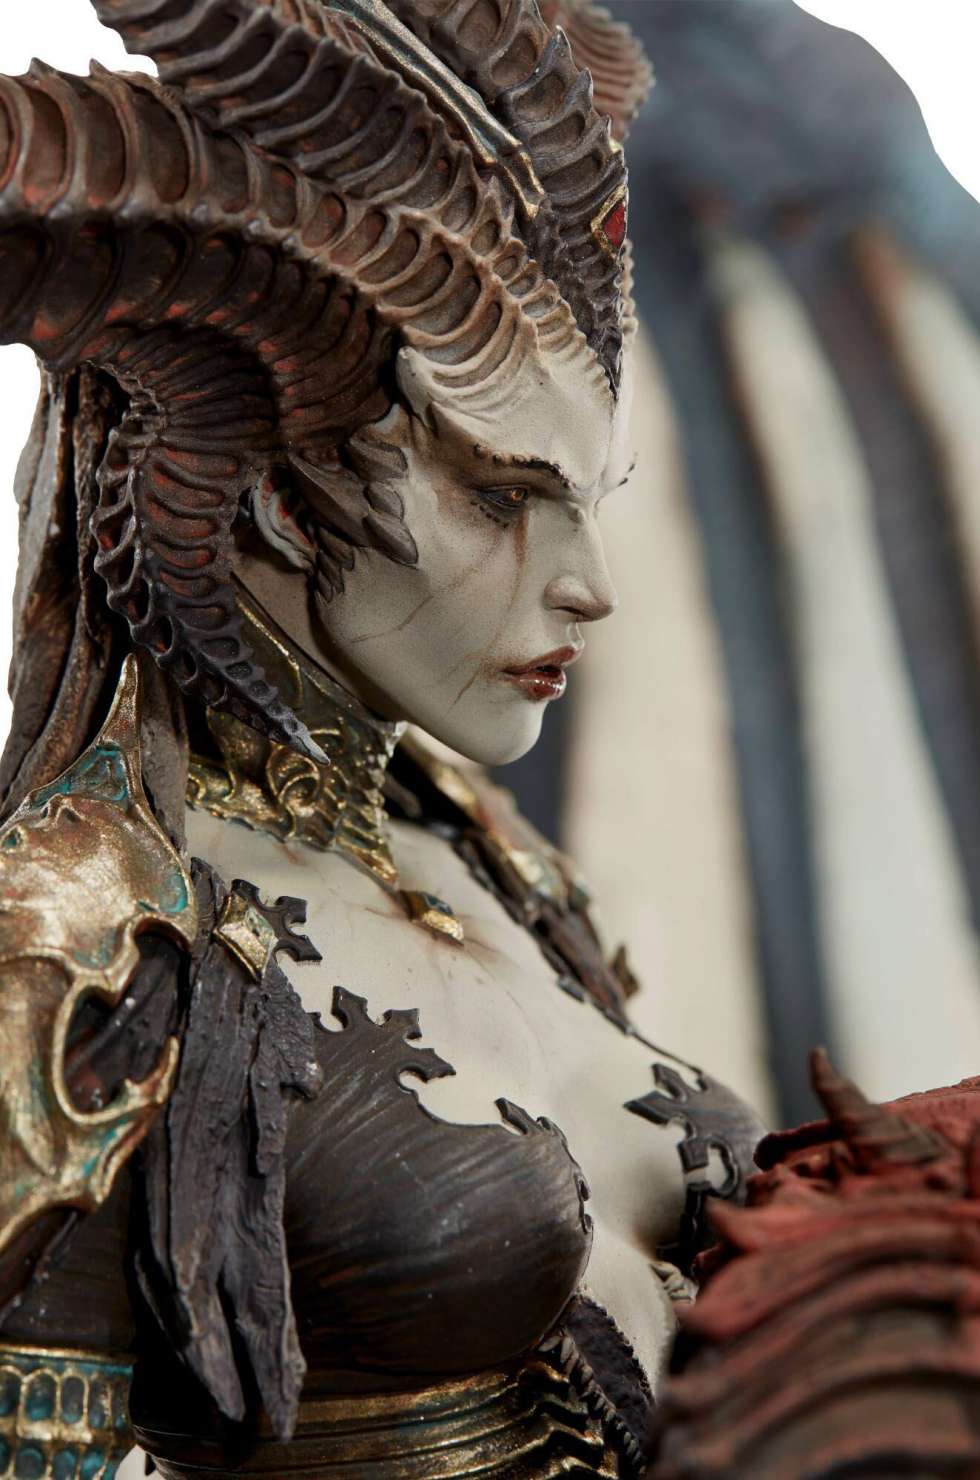 Фигурку Лилит из Diablo IV можно приобрести за $500